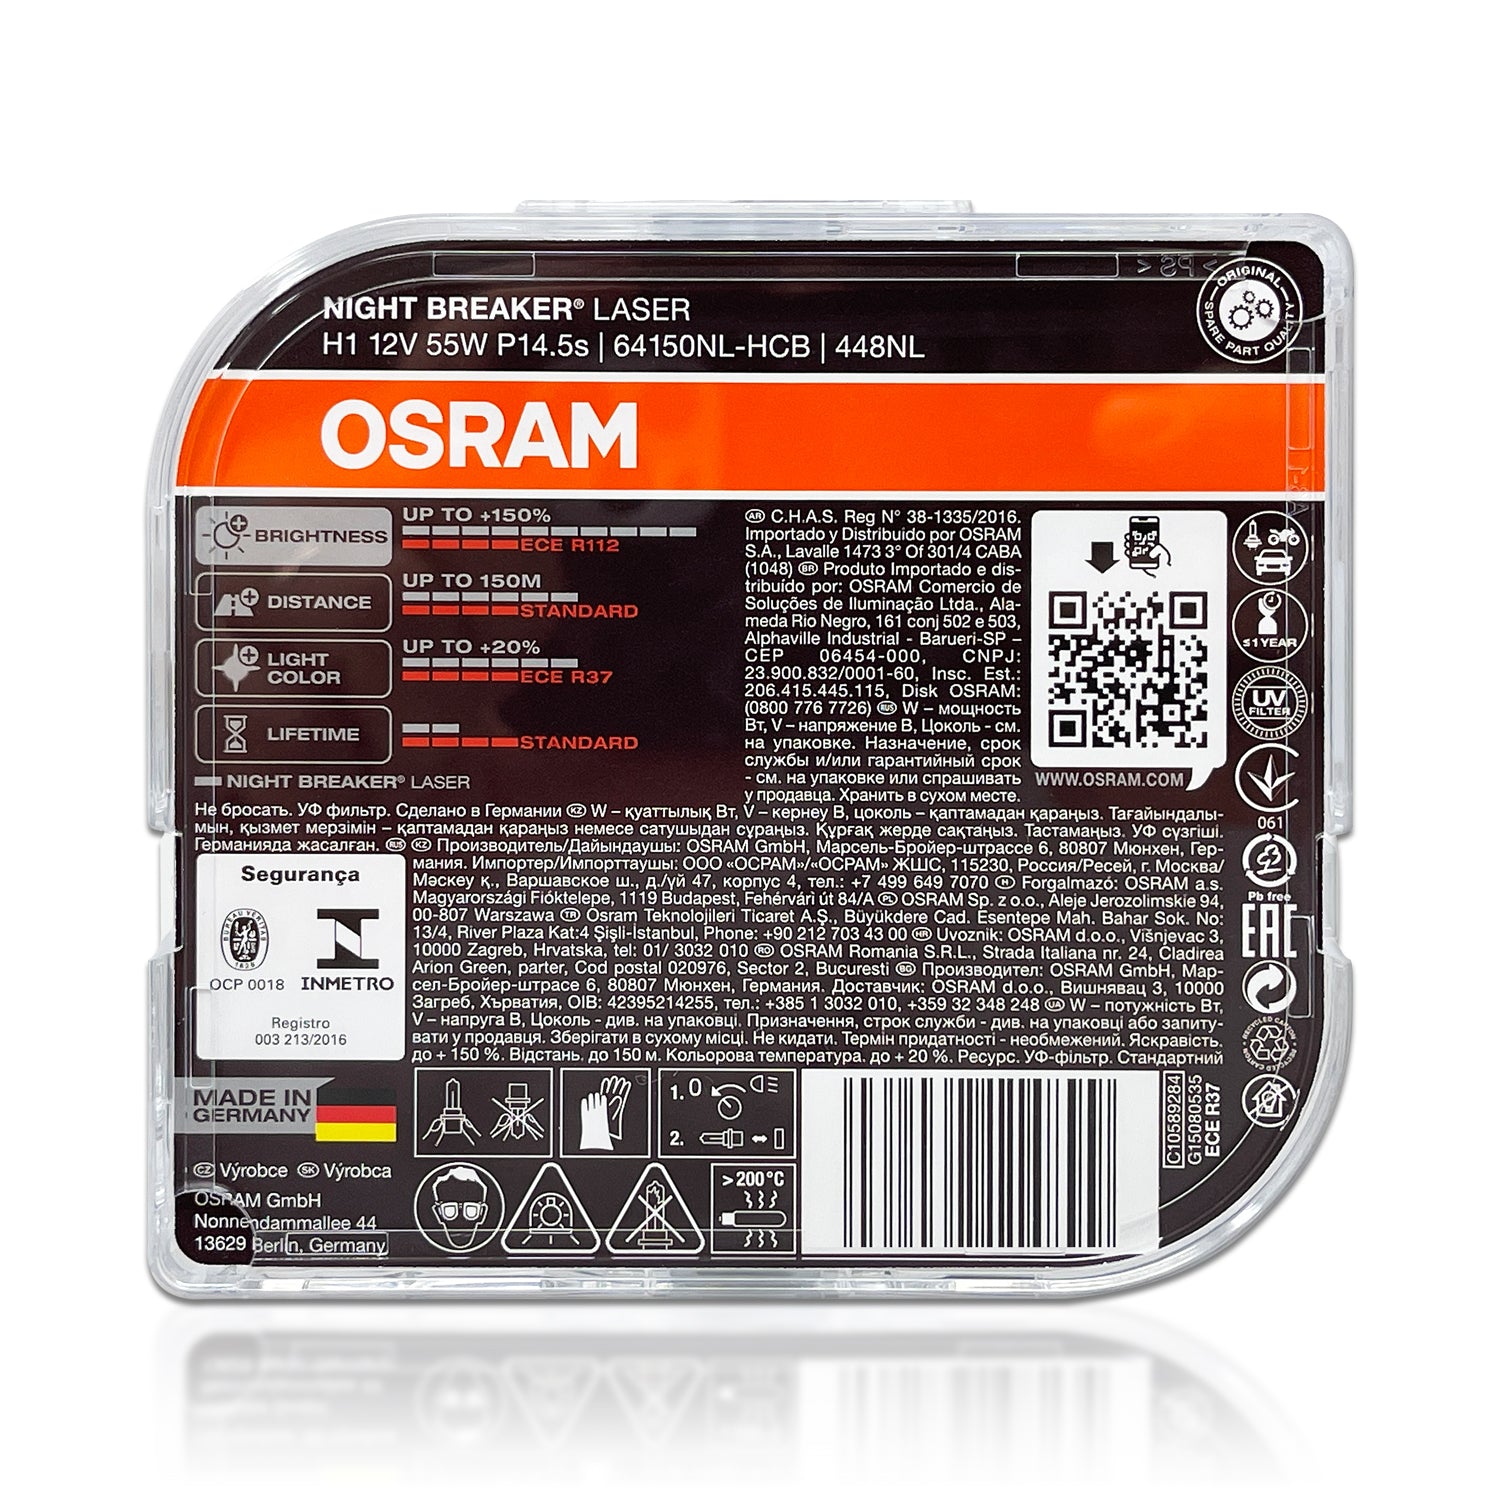 OSRAM H1 NIGHT BREAKER LASER Most Powerful Halogen Bulbs 150% NEXT  GENERATION